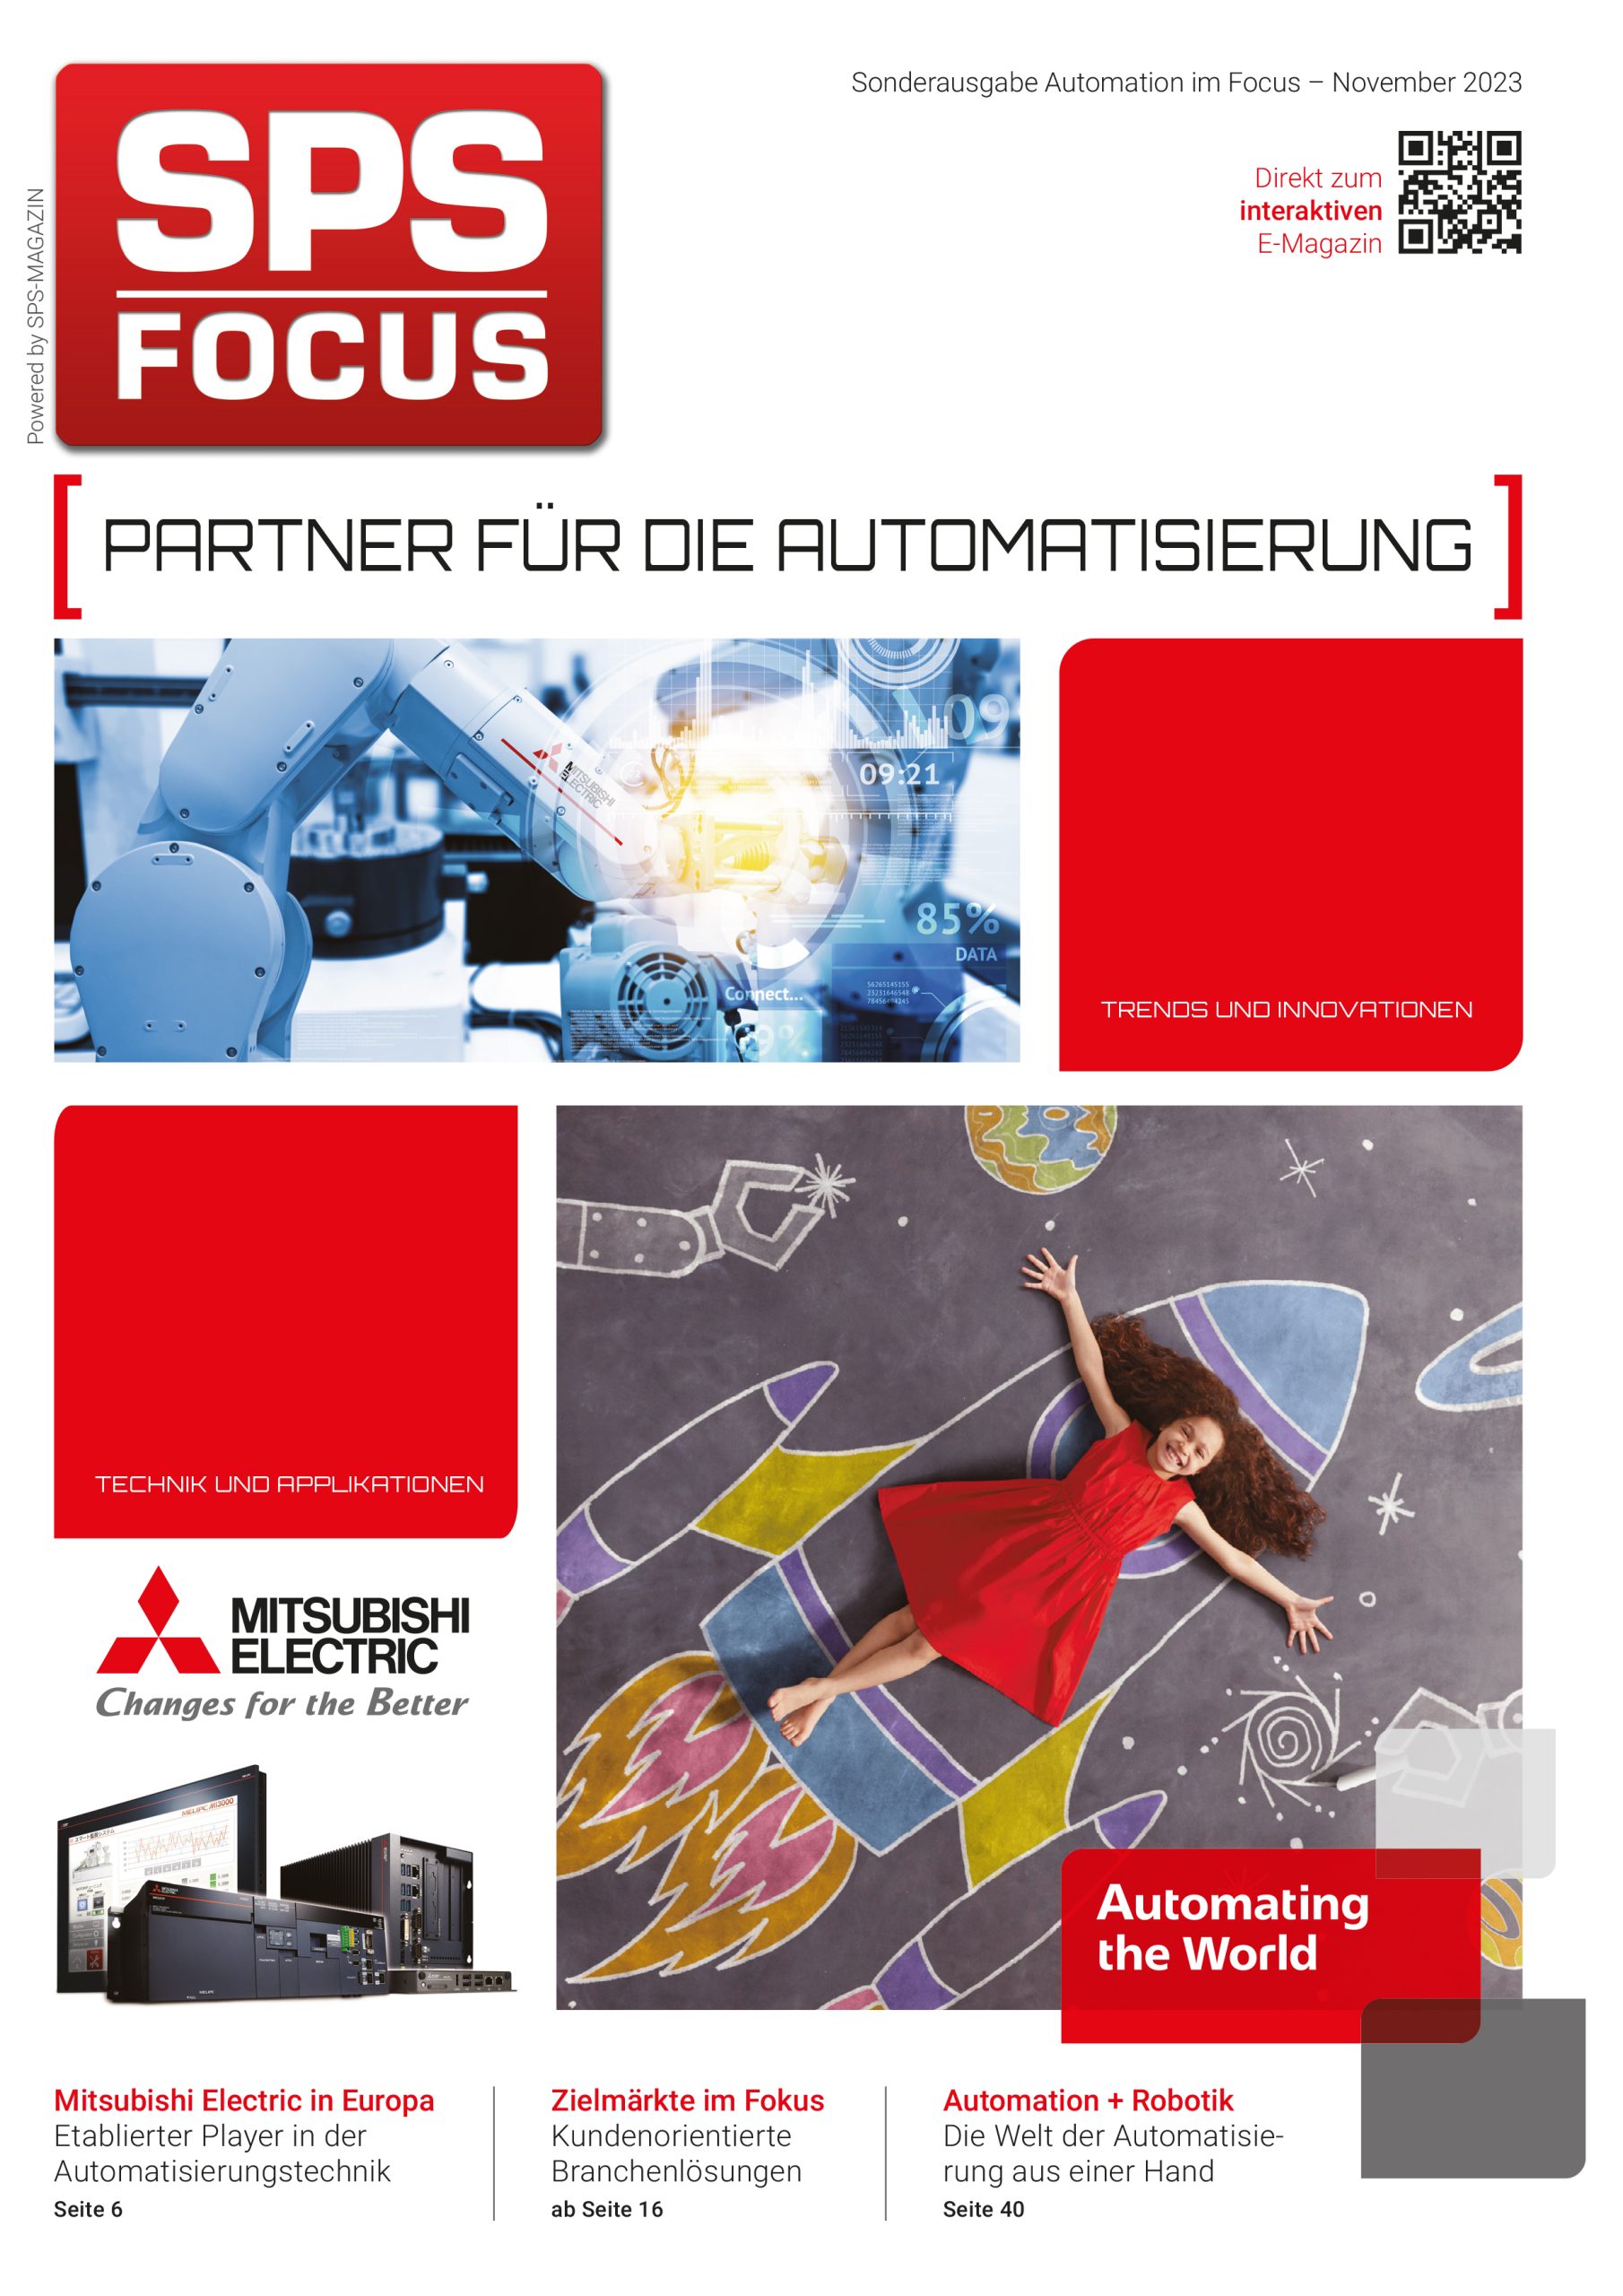 Automation im Focus Mitsubishi Electric 2023